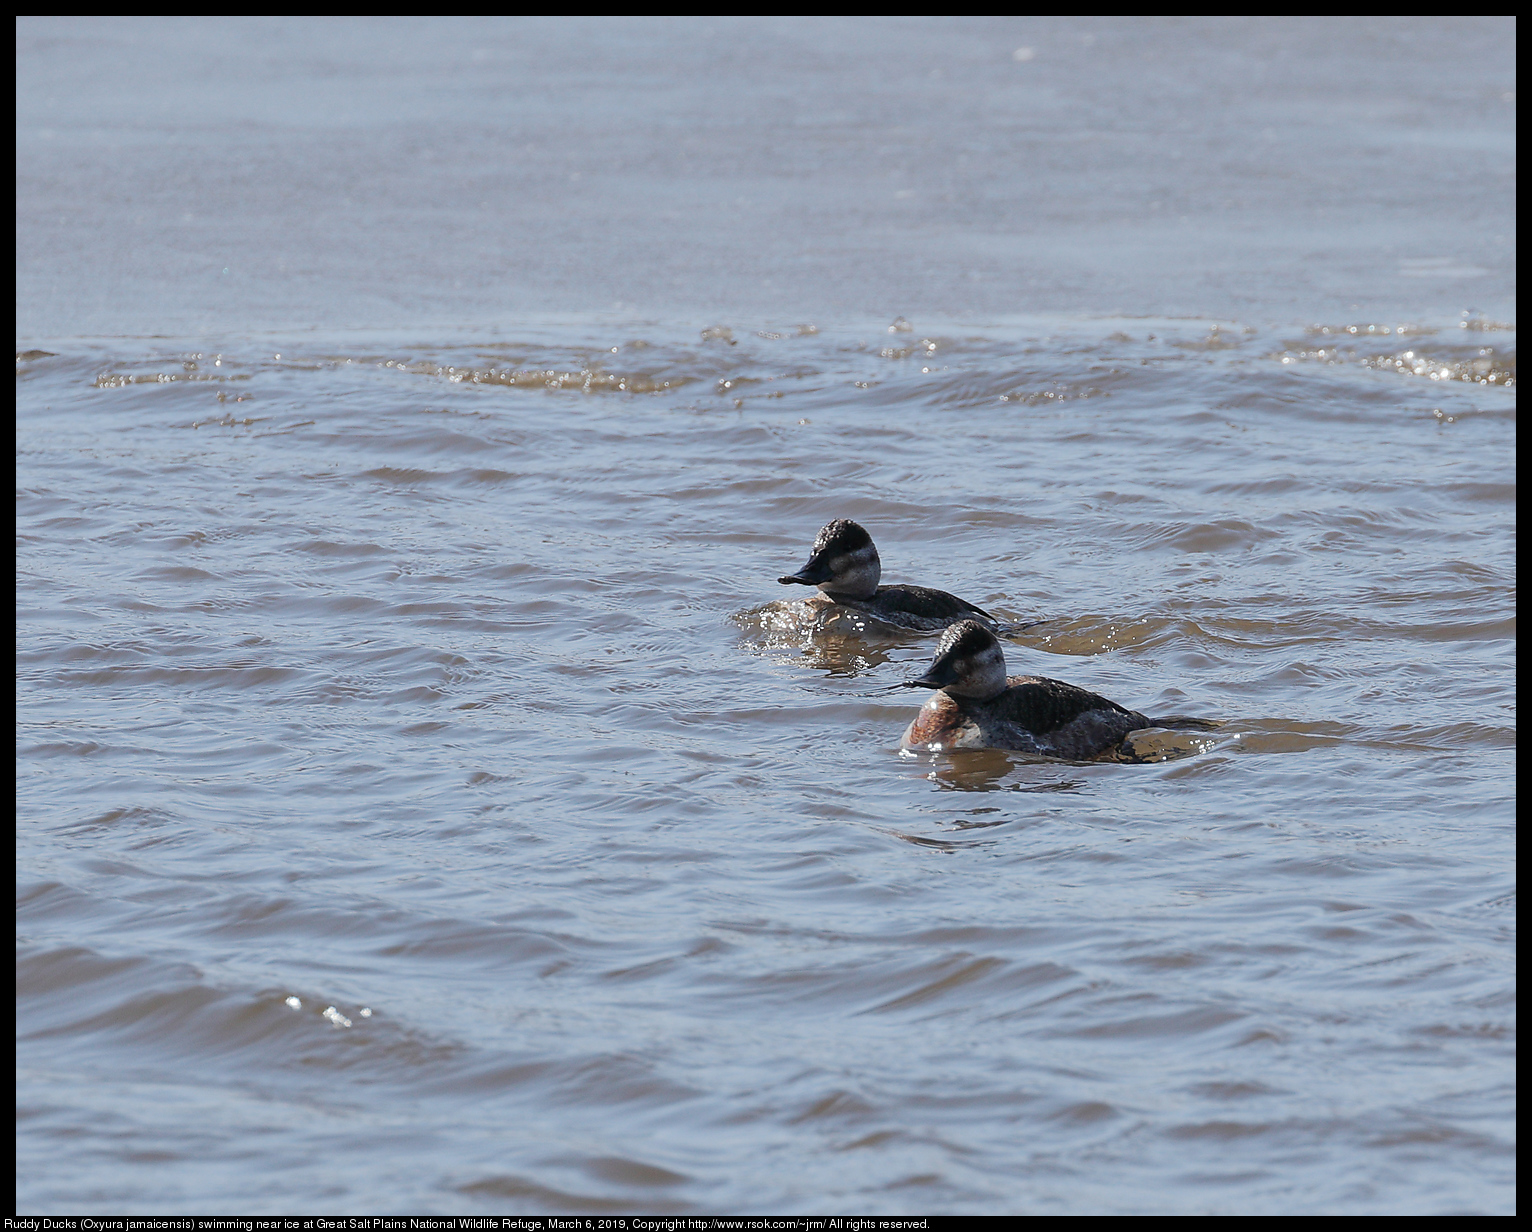 Ruddy Ducks (Oxyura jamaicensis) swimming at Great Salt Plains National Wildlife Refuge, March 6, 2019